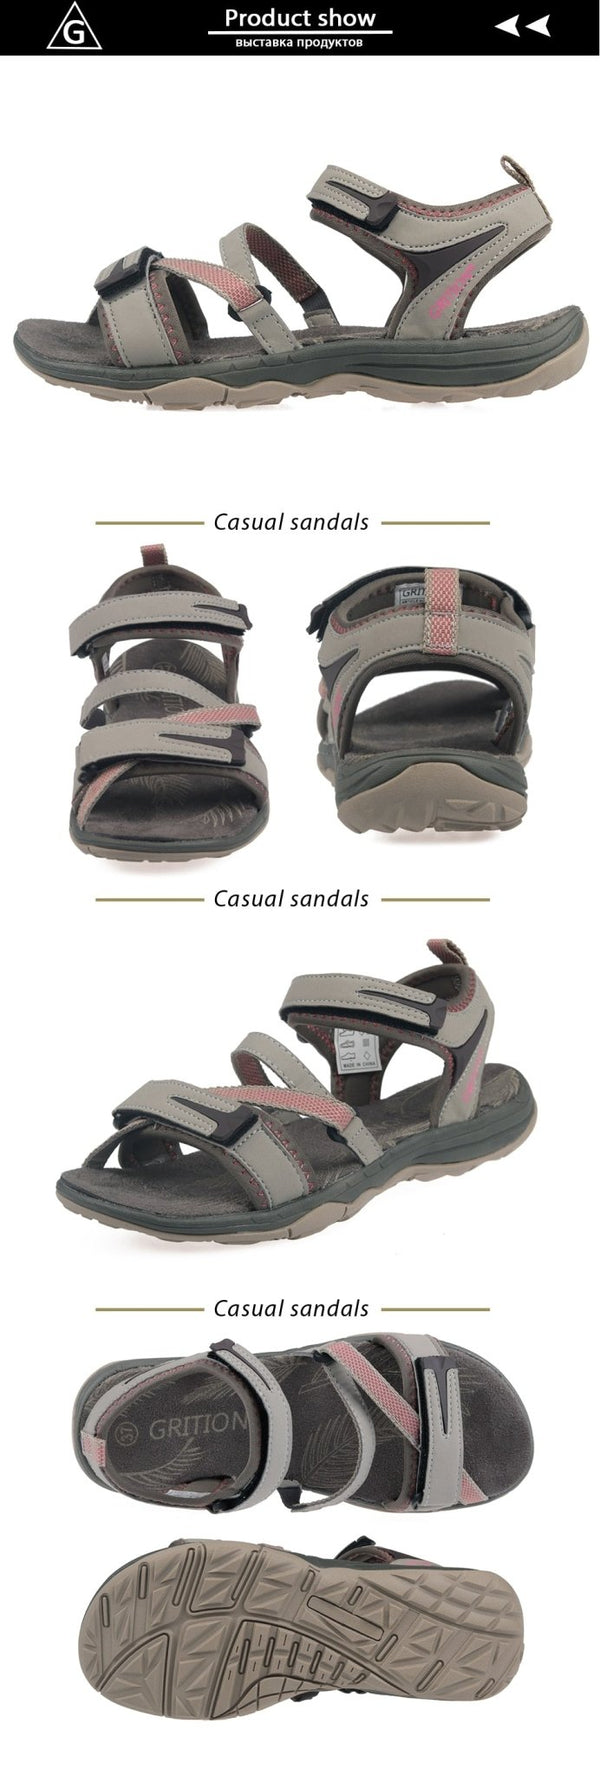 Beach Sandals Women Summer Outdoor Flat Sandals Ladies Open Toe Shoes Lightweight Breathable Walking Hiking Sandals - Vimost Shop